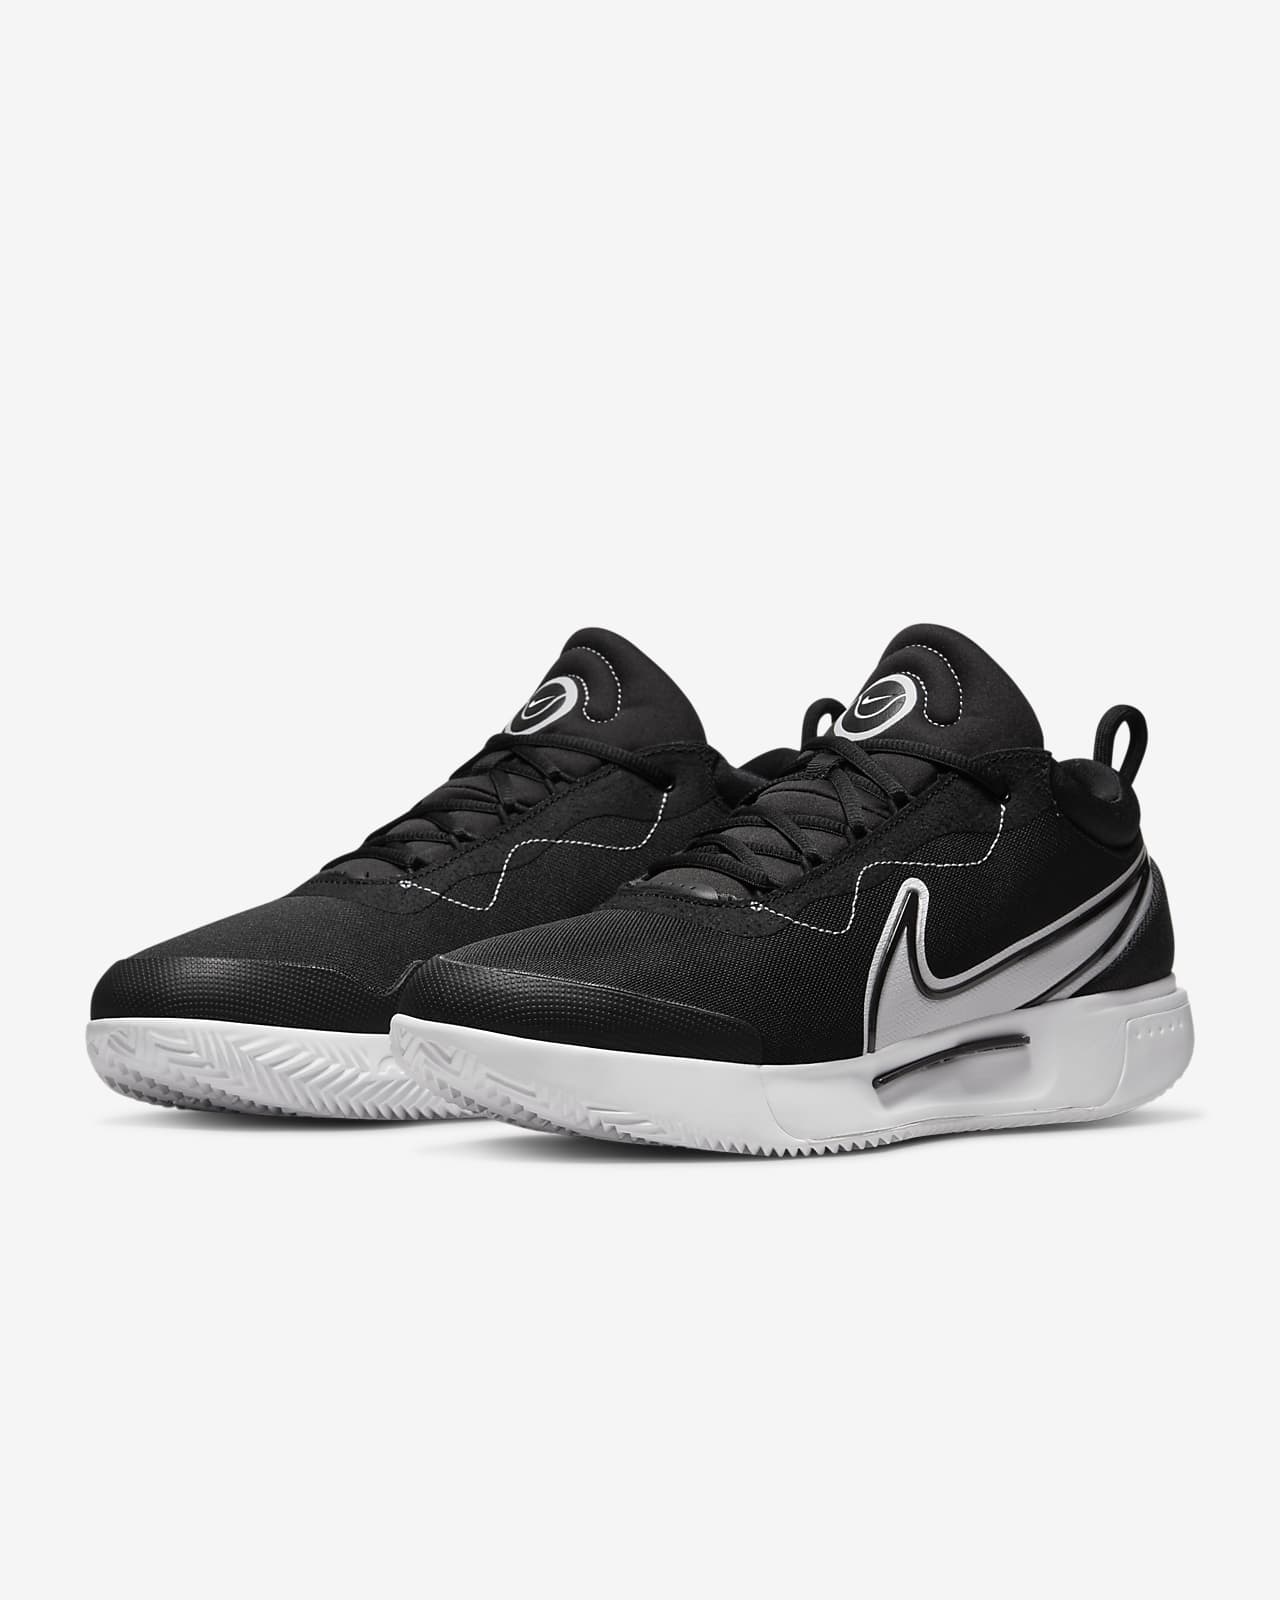 NikeCourt Zoom Pro Men s Clay Court Tennis Shoes Nike DK